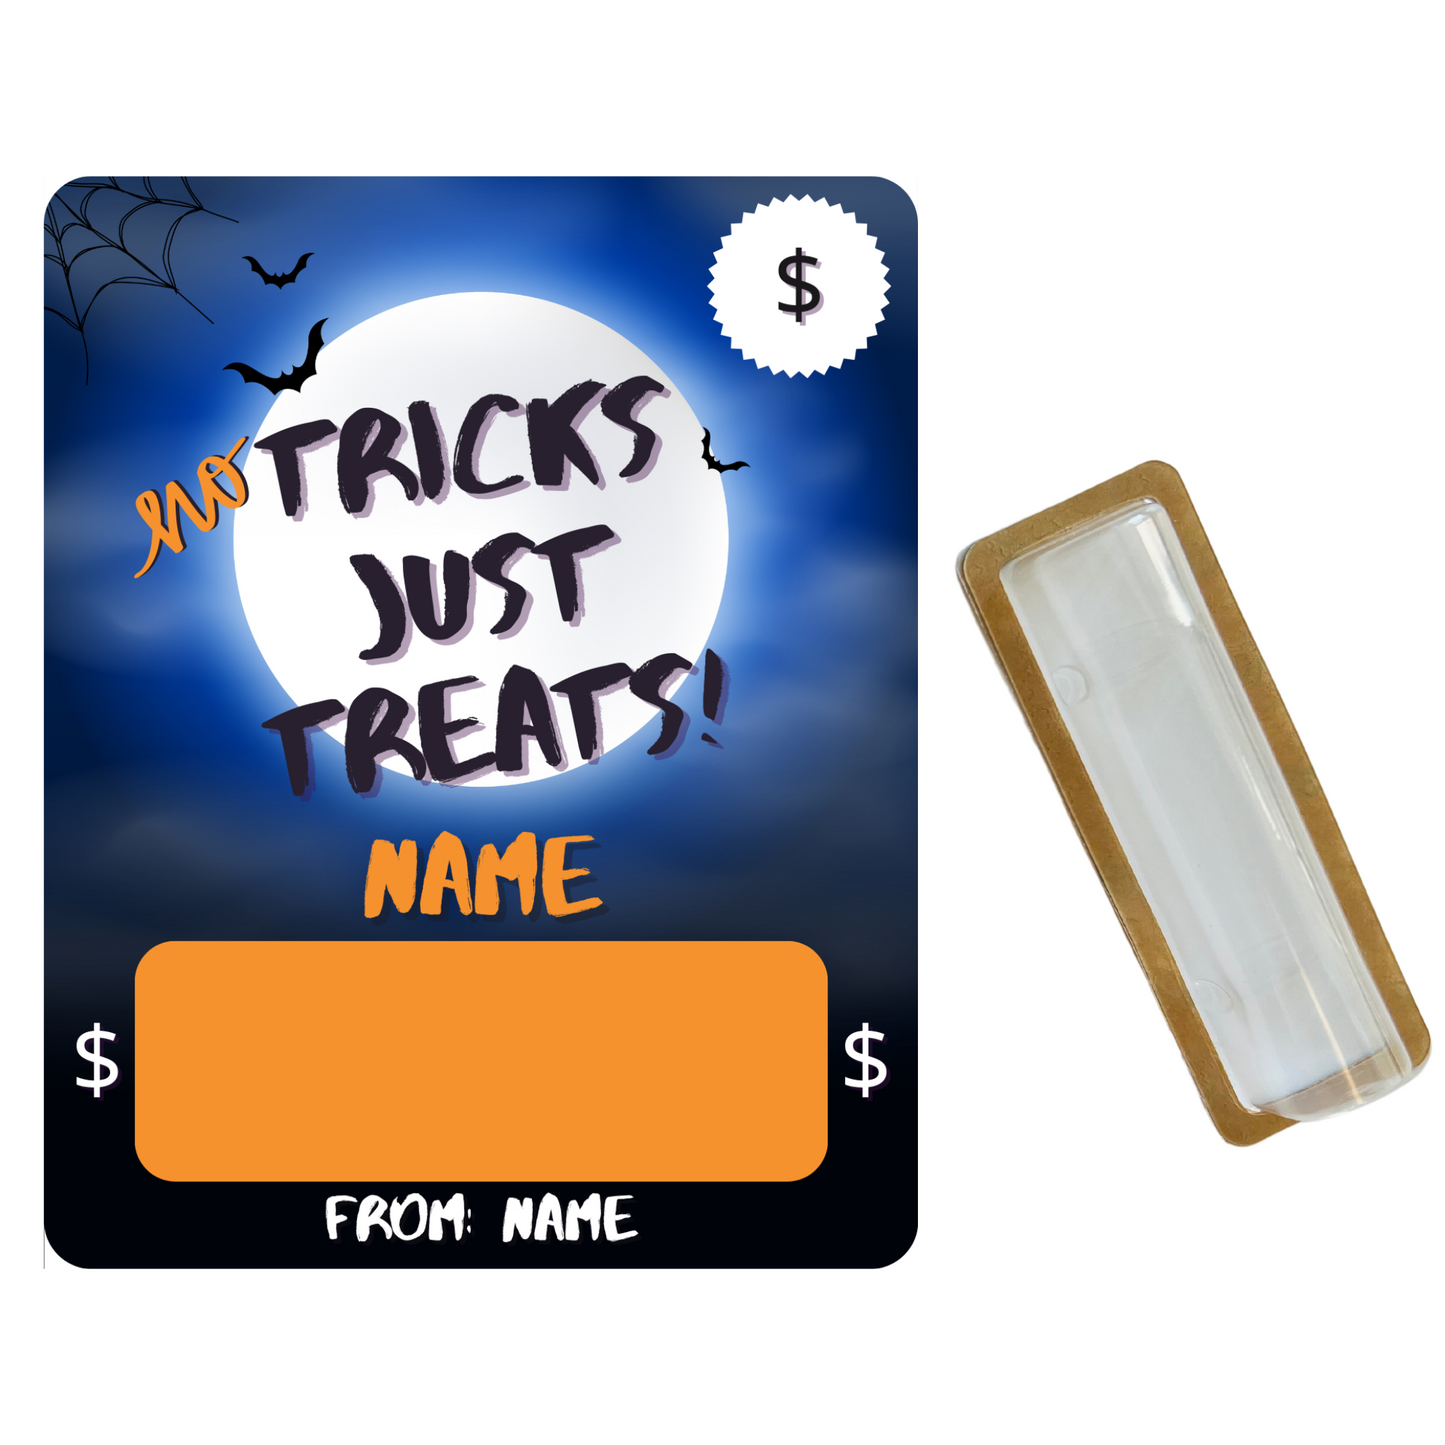 No tricks, just treats! Halloween Money holder greeting cards